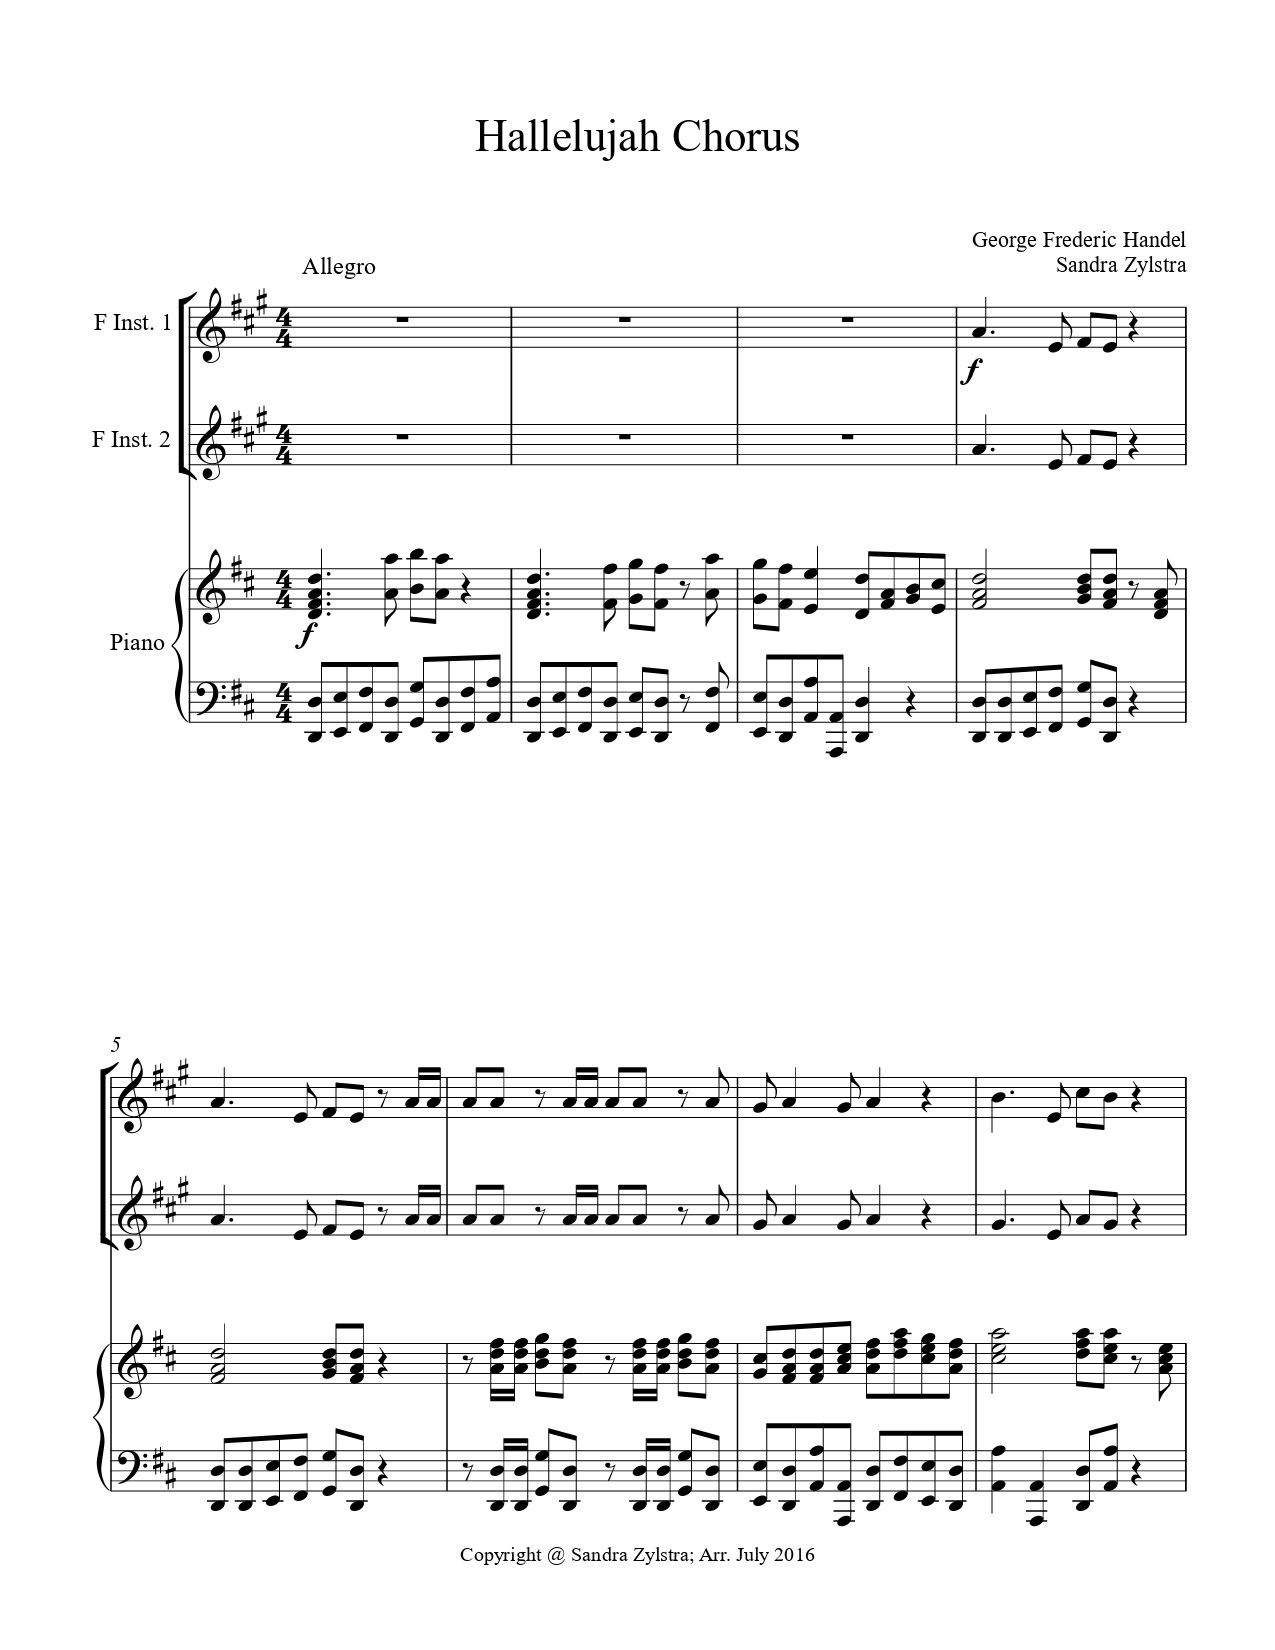 Hallelujah Chorus F instrument duet parts cover page 00021